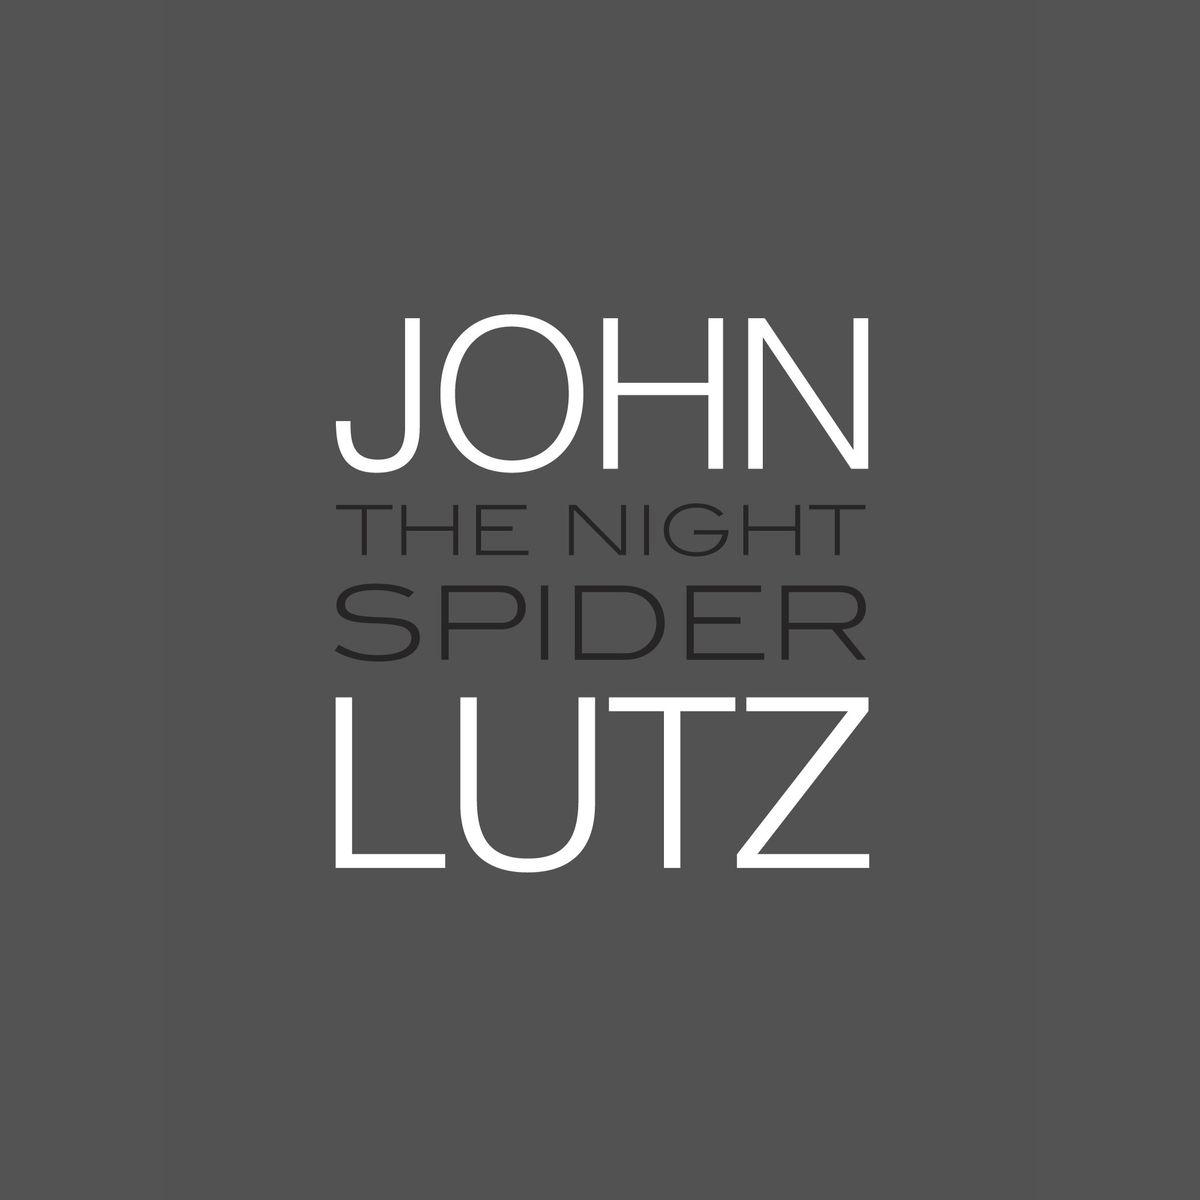 Spider -Man 3 Logo - The Night Spider audiobook by John Lutz - Rakuten Kobo